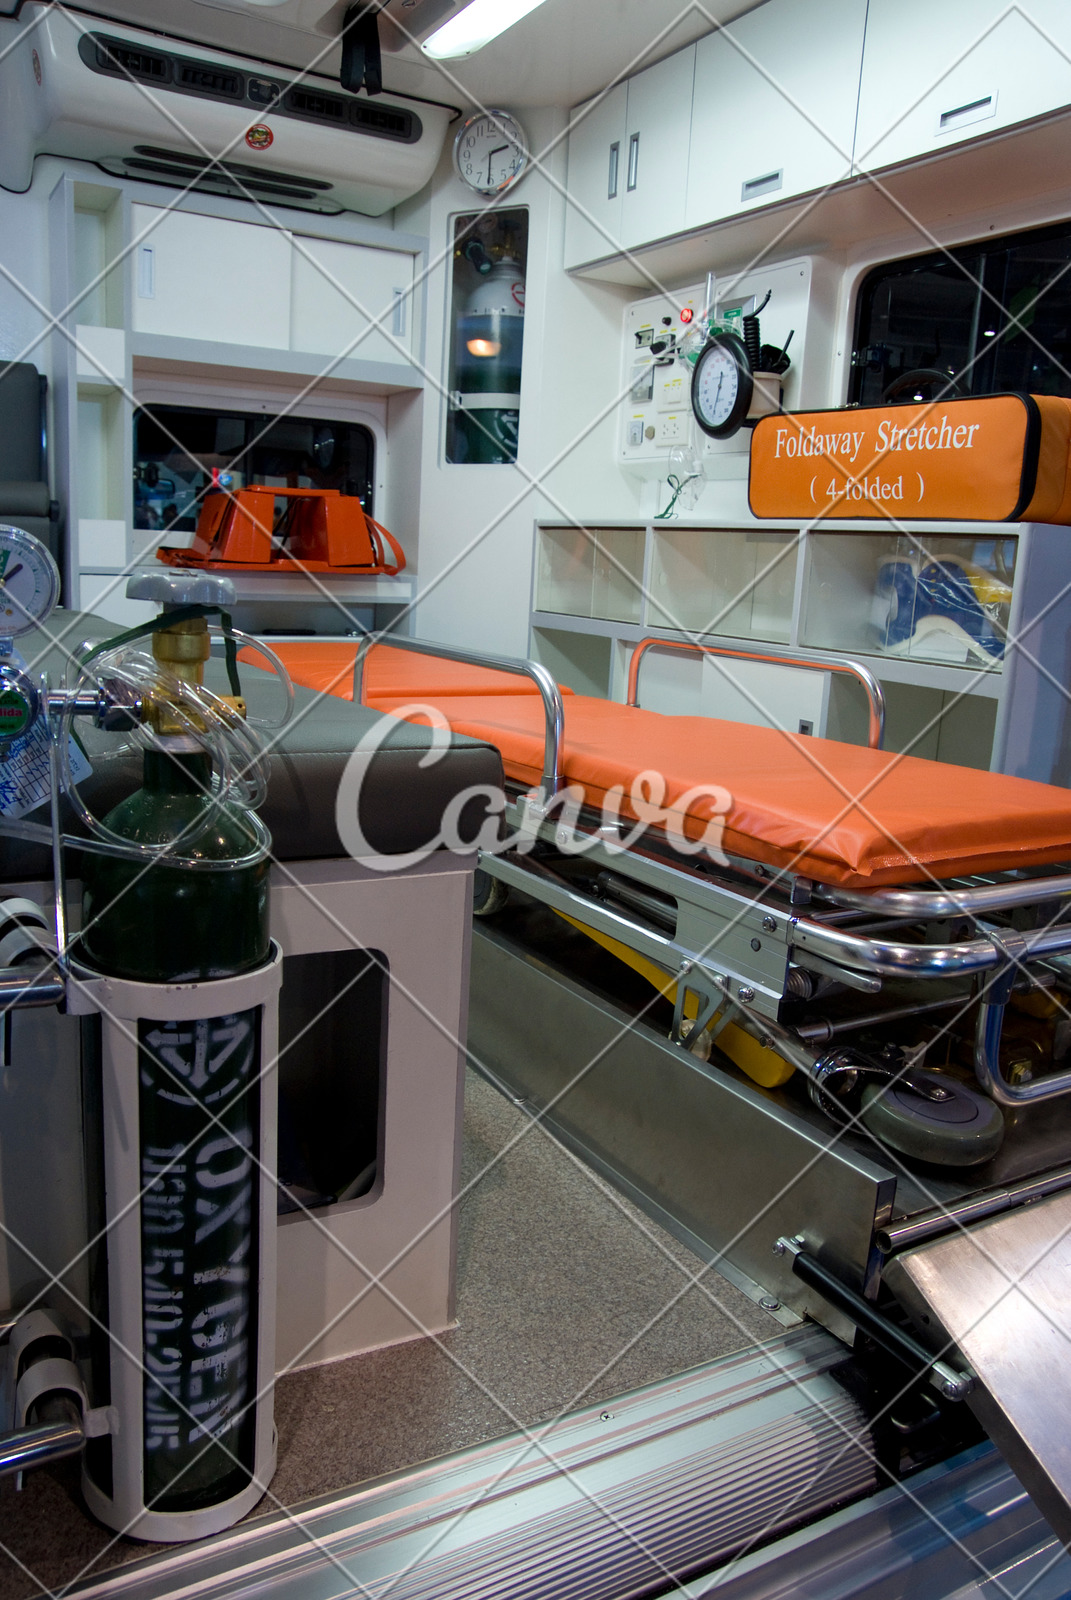 Interior Of Ambulance Photos By Canva